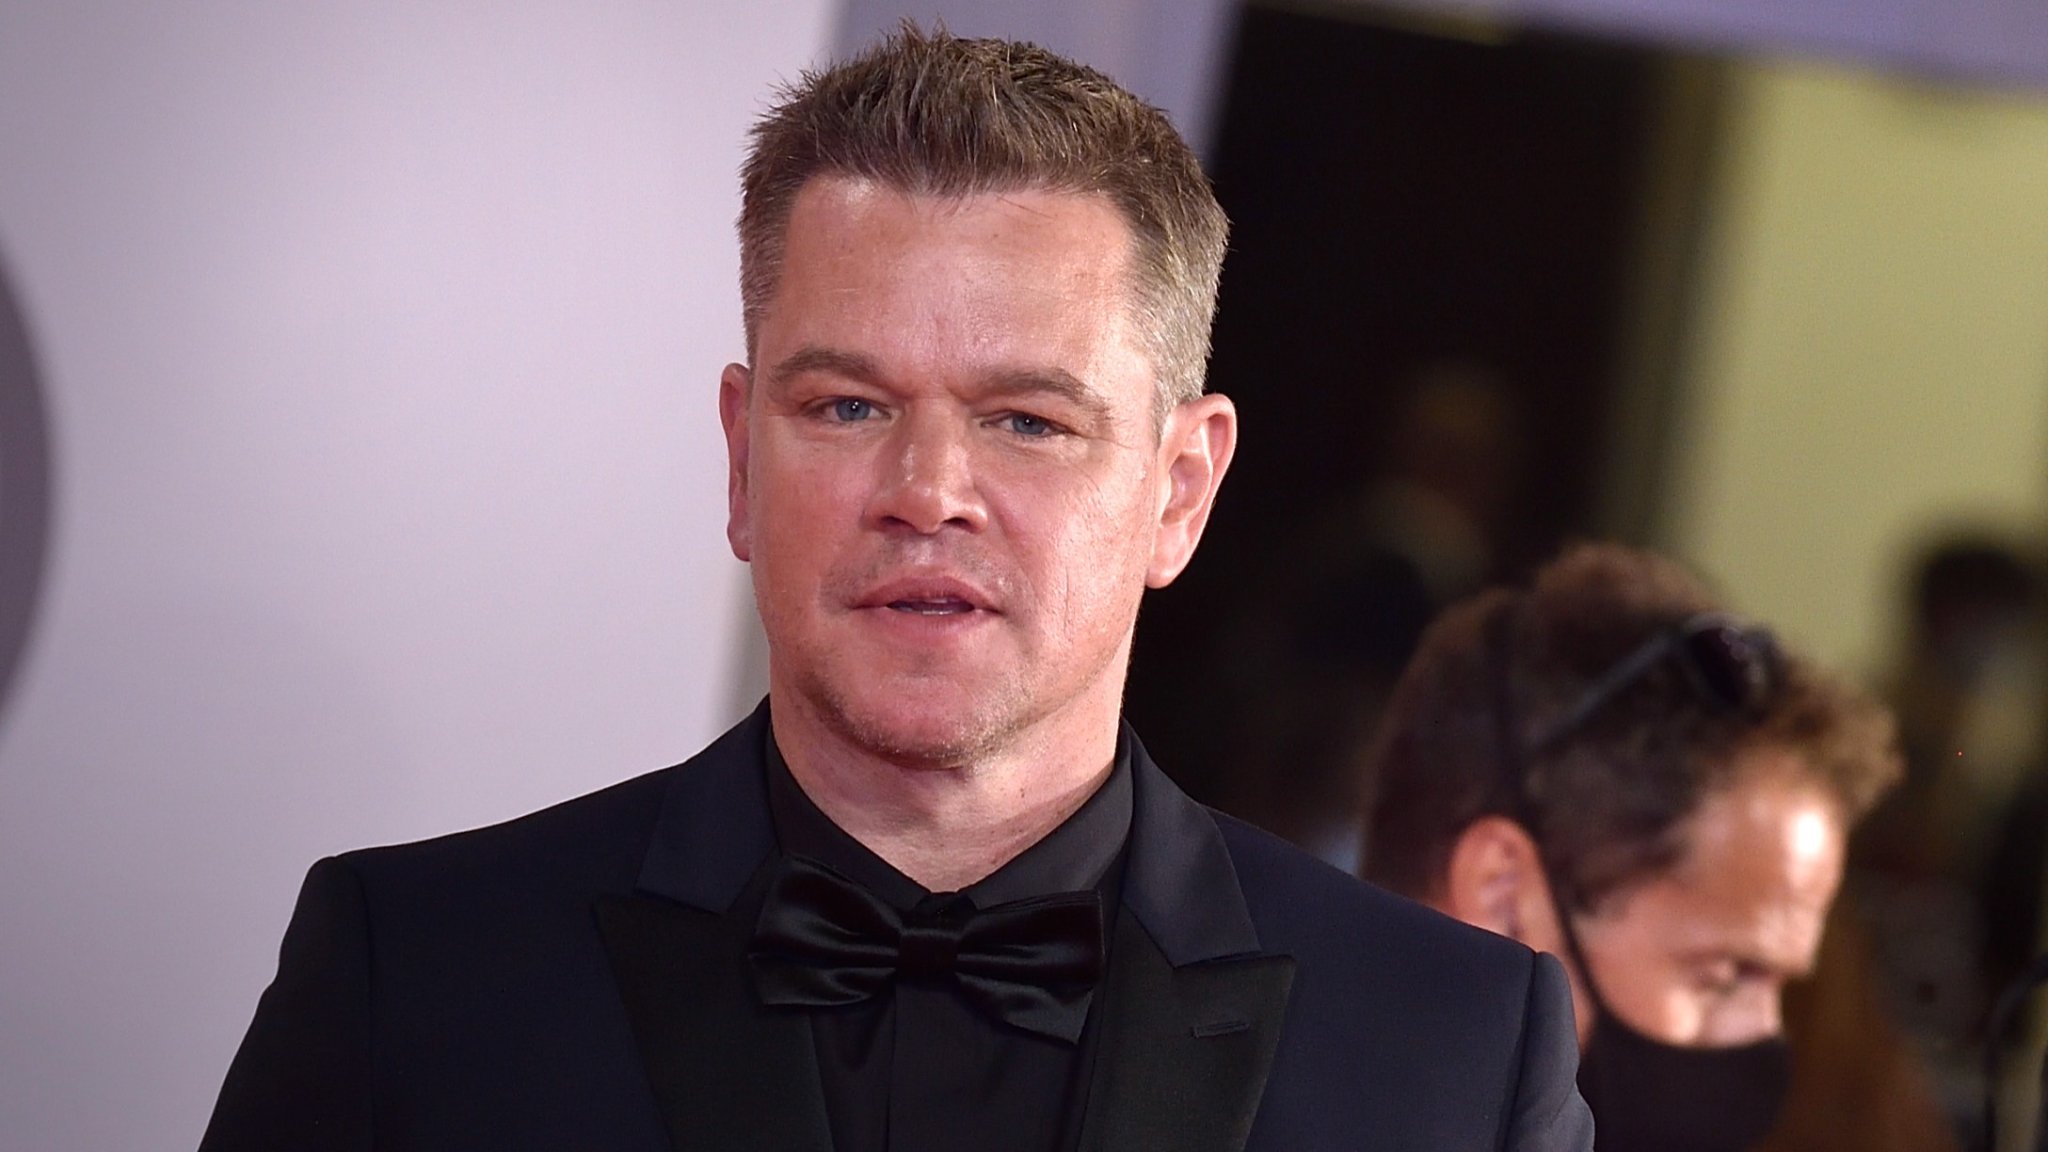 Matt Damon Reveals the Wild Haircut His Kids Gave Him After He'd Had a Few Drinks